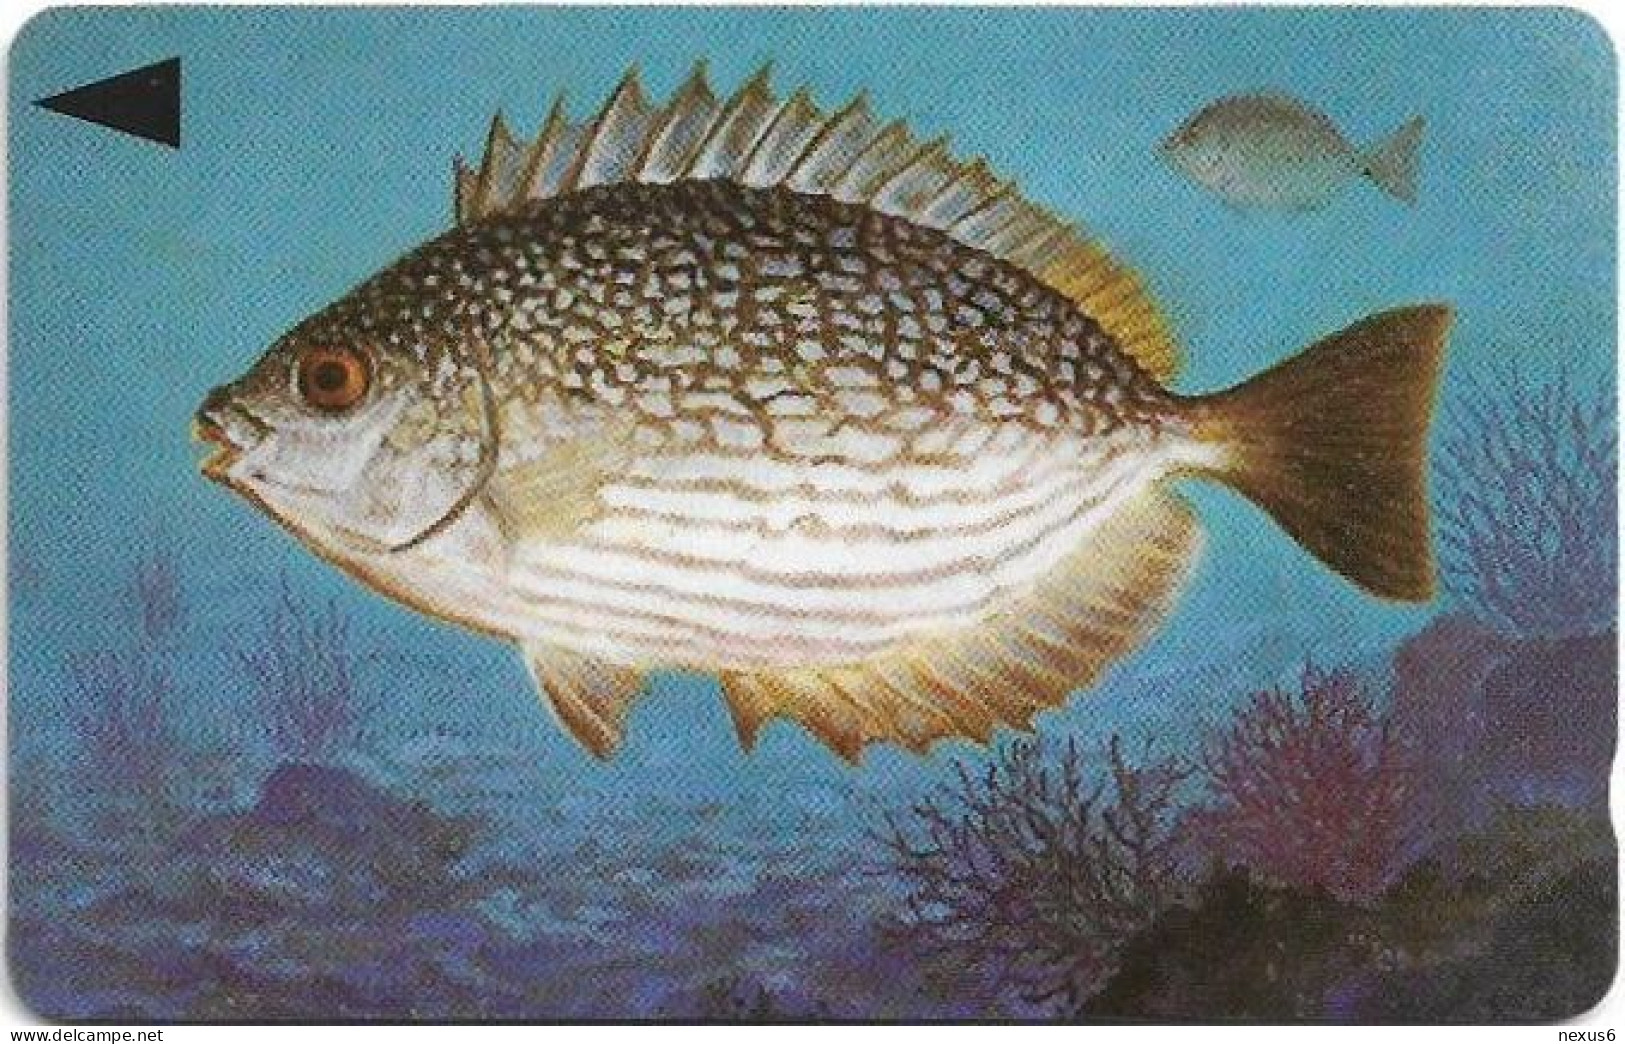 Bahrain - Batelco (GPT) - Fish Of Bahrain - Streaked Rabbitfish - 39BAHQ (Normal 0, Round Top ''3''), 1996, 25U, Used - Bahreïn